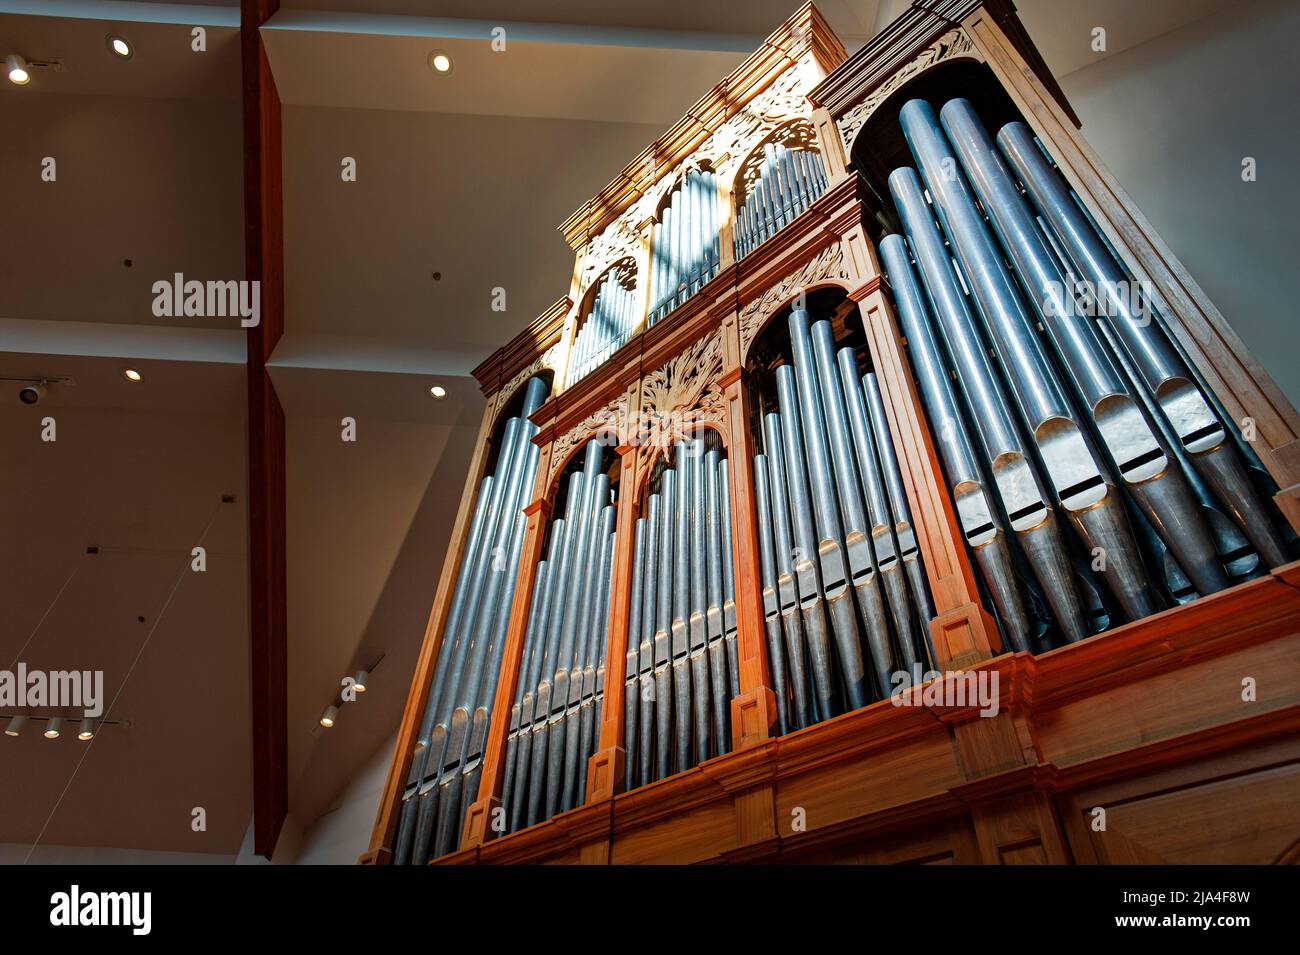 Close-up of pipe organ. Stock Photo